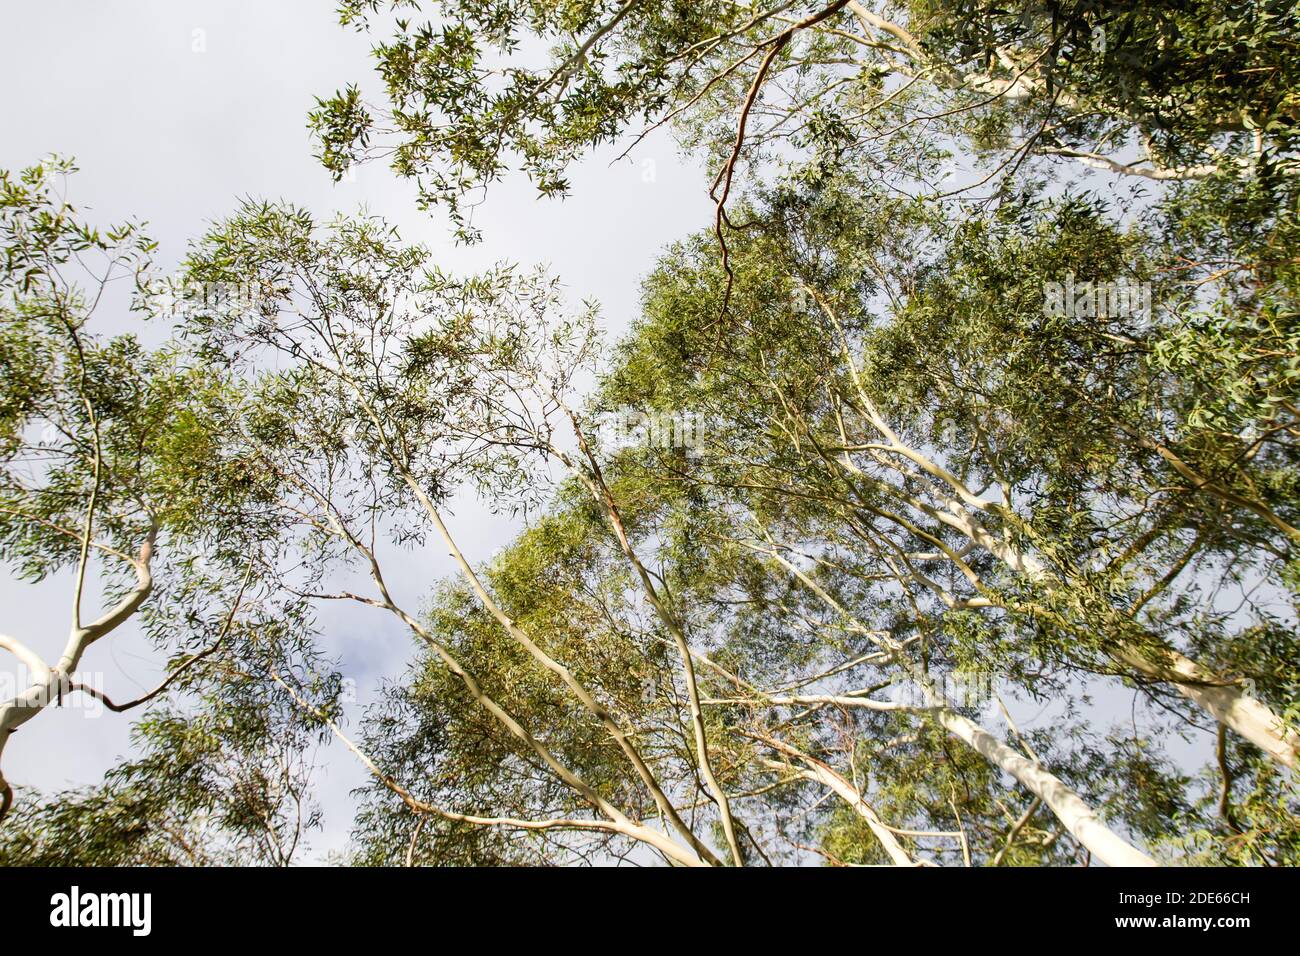 Eucalypt trees with green foliage Stock Photo